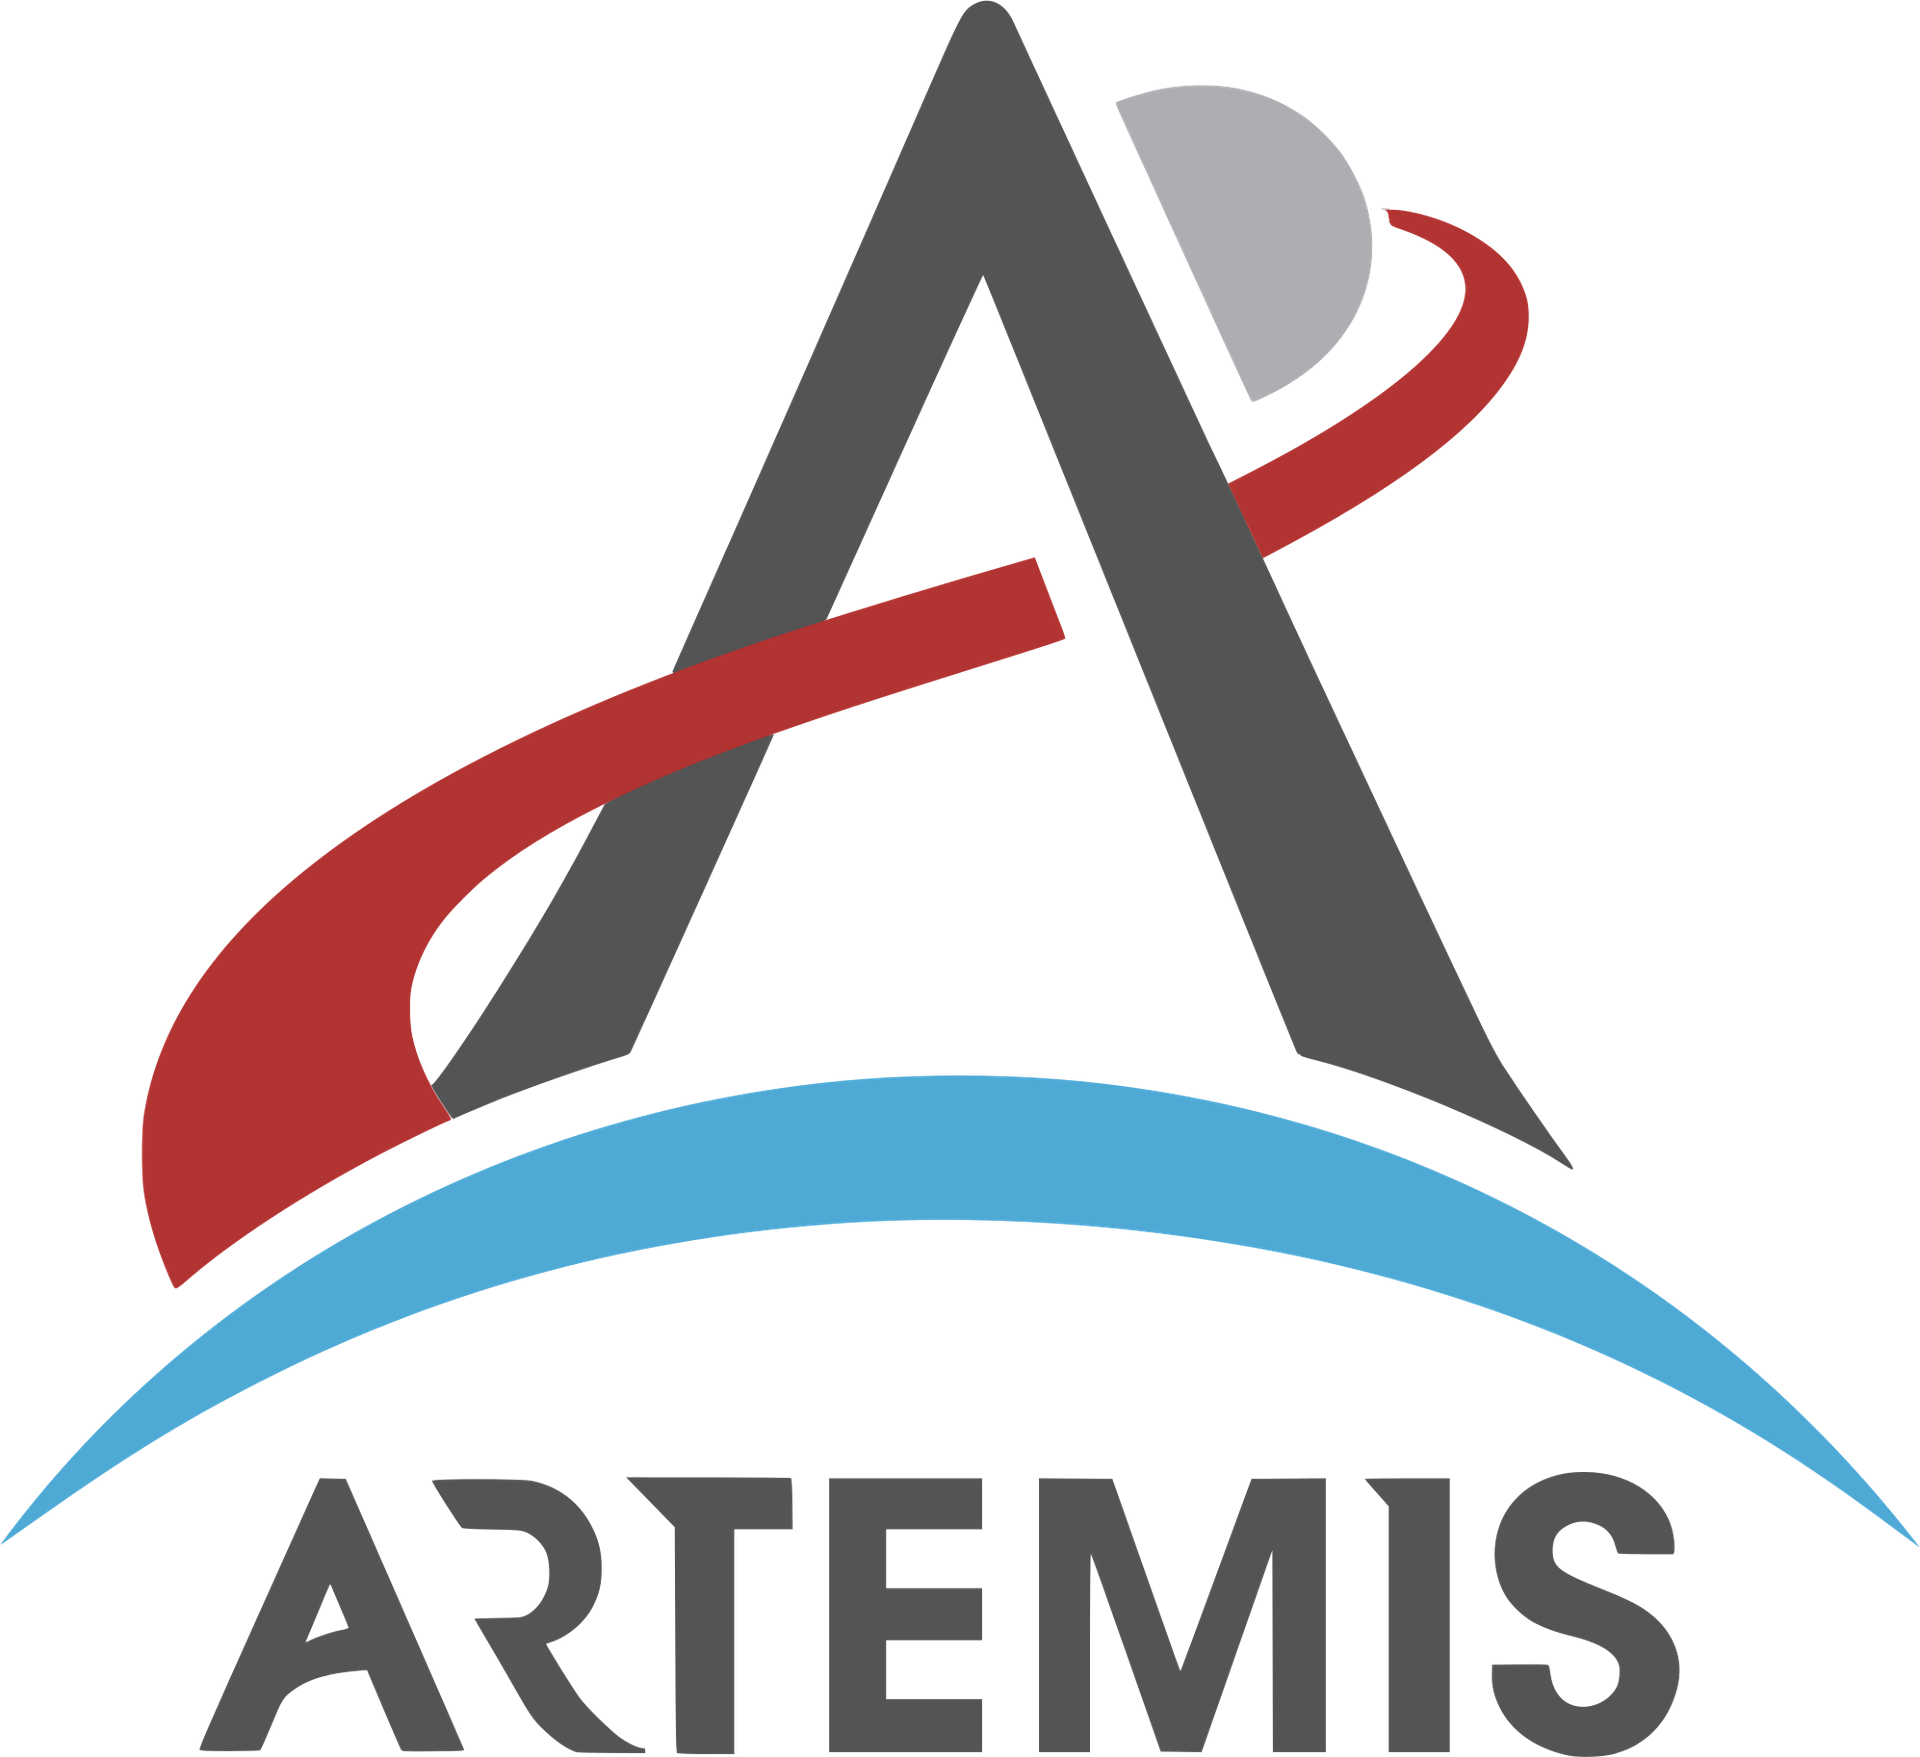 artemis nasa launch